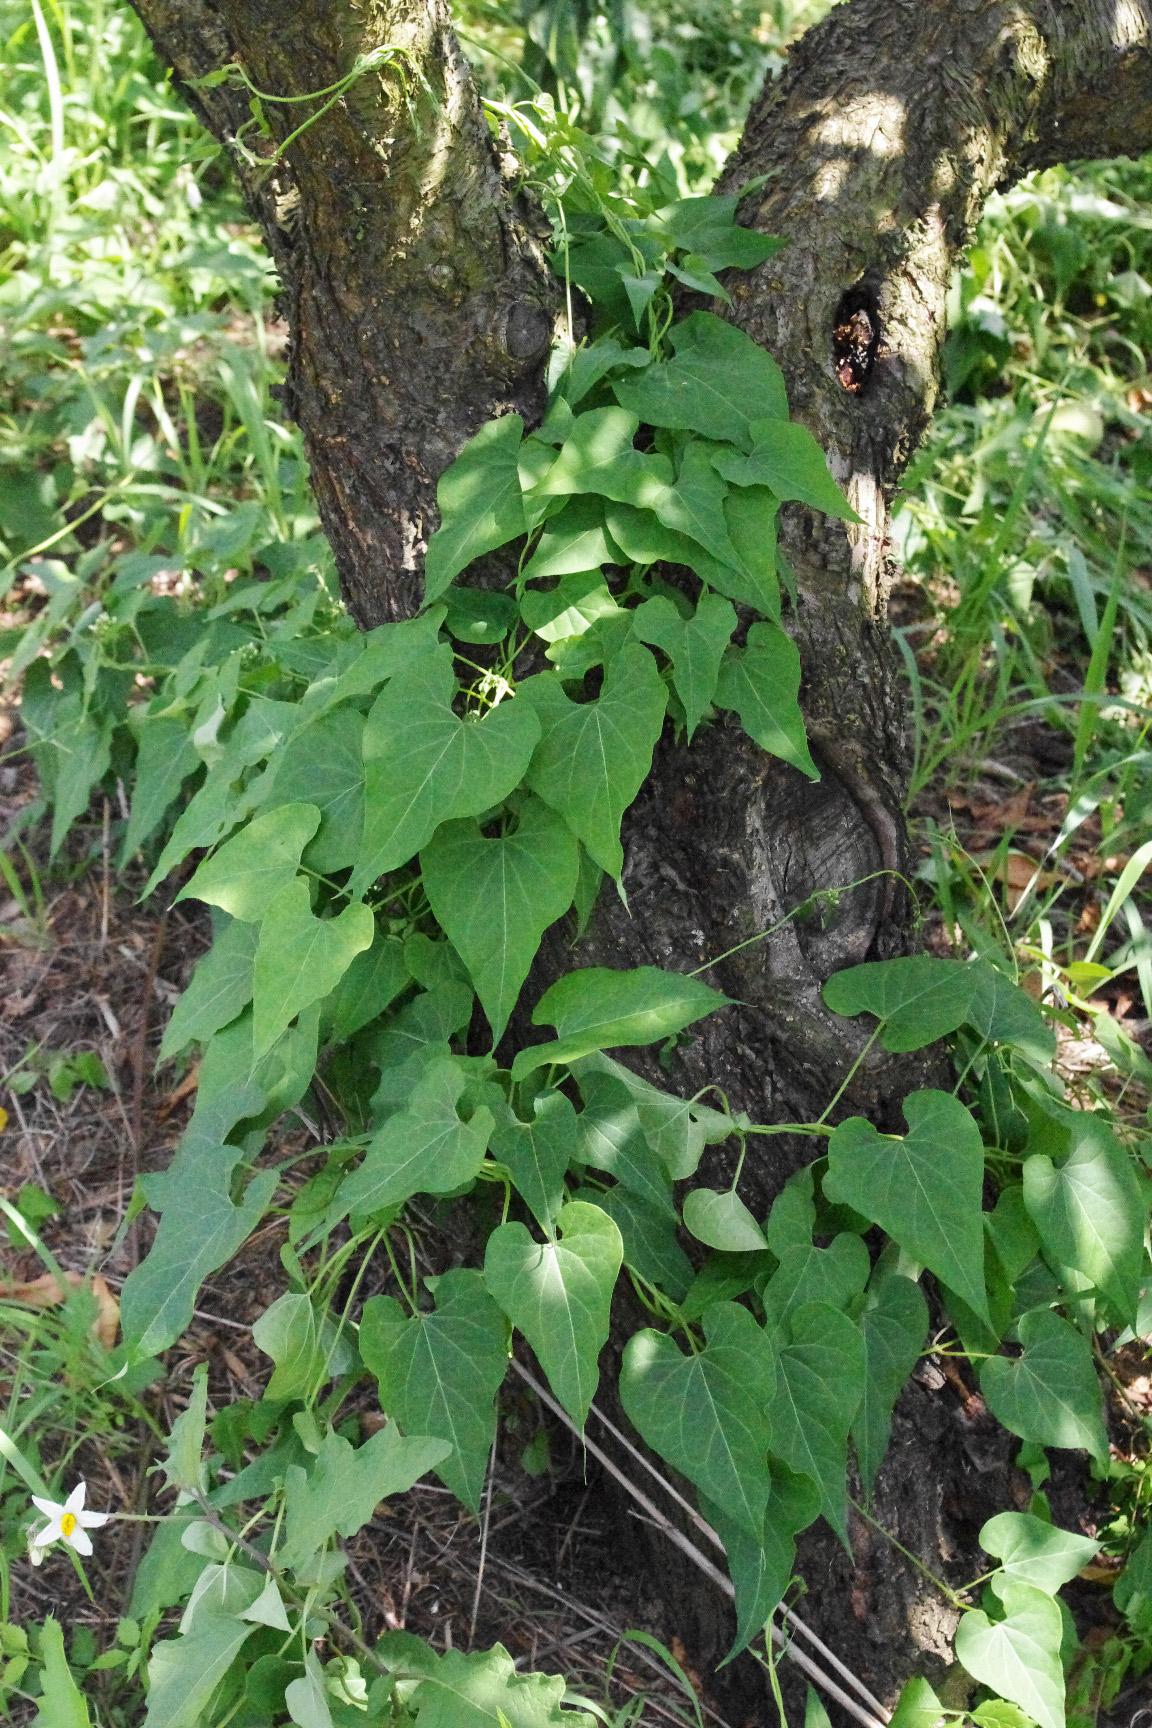 Honeyvine milkweed growth habit. 